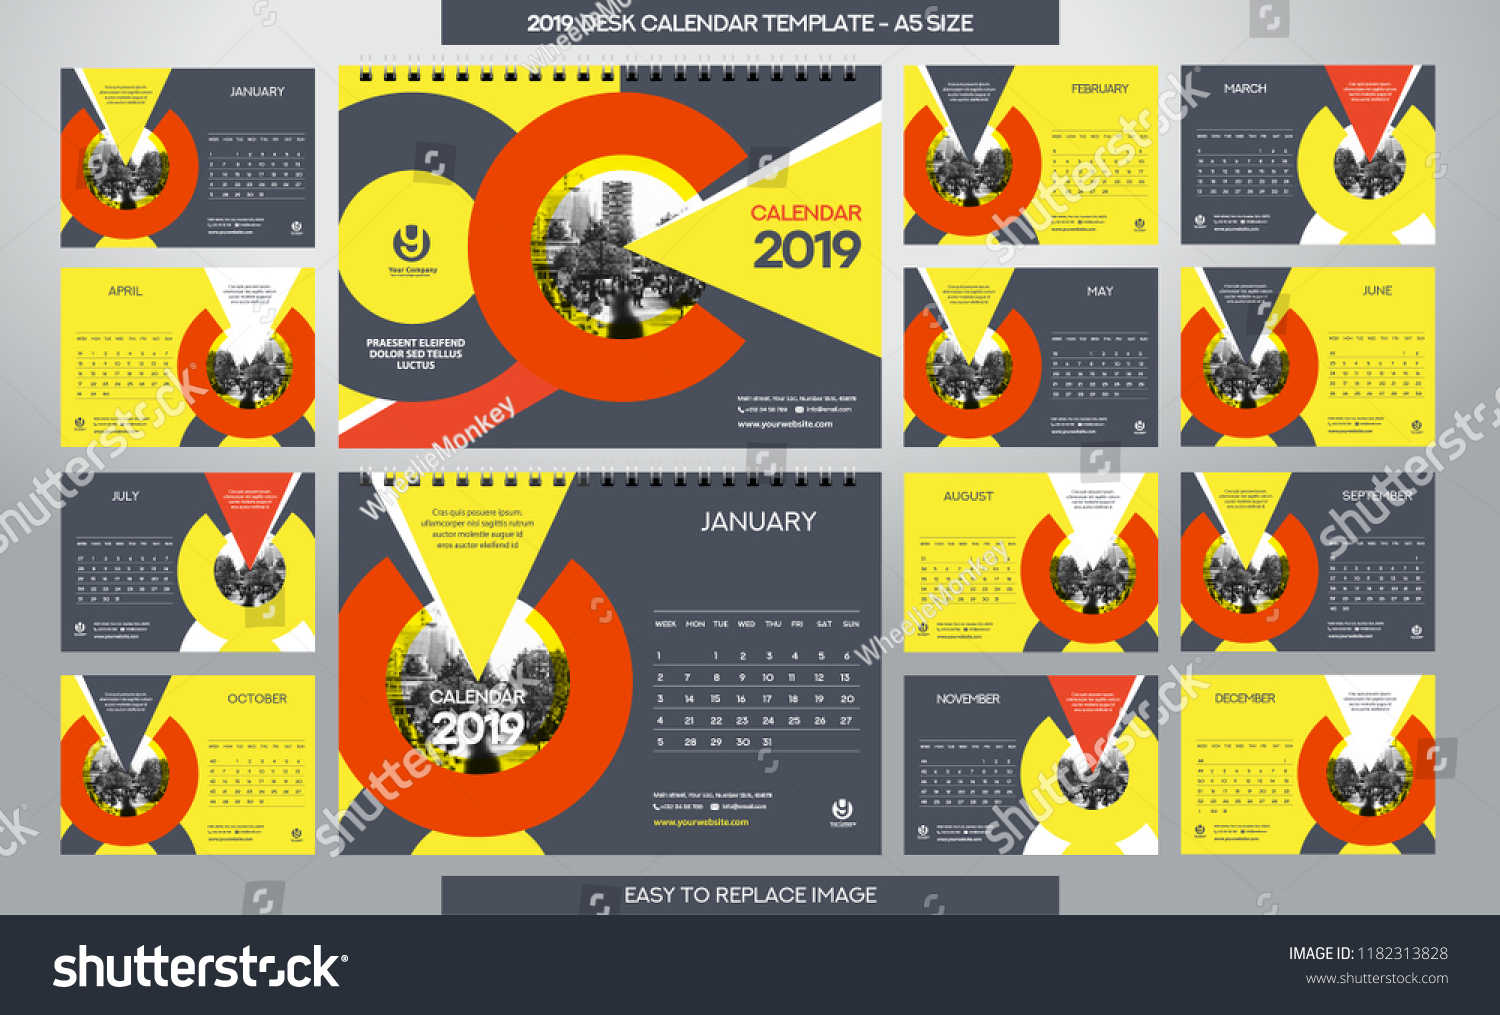 desk-calendar-2019-template-12-months-stock-vector-royalty-free